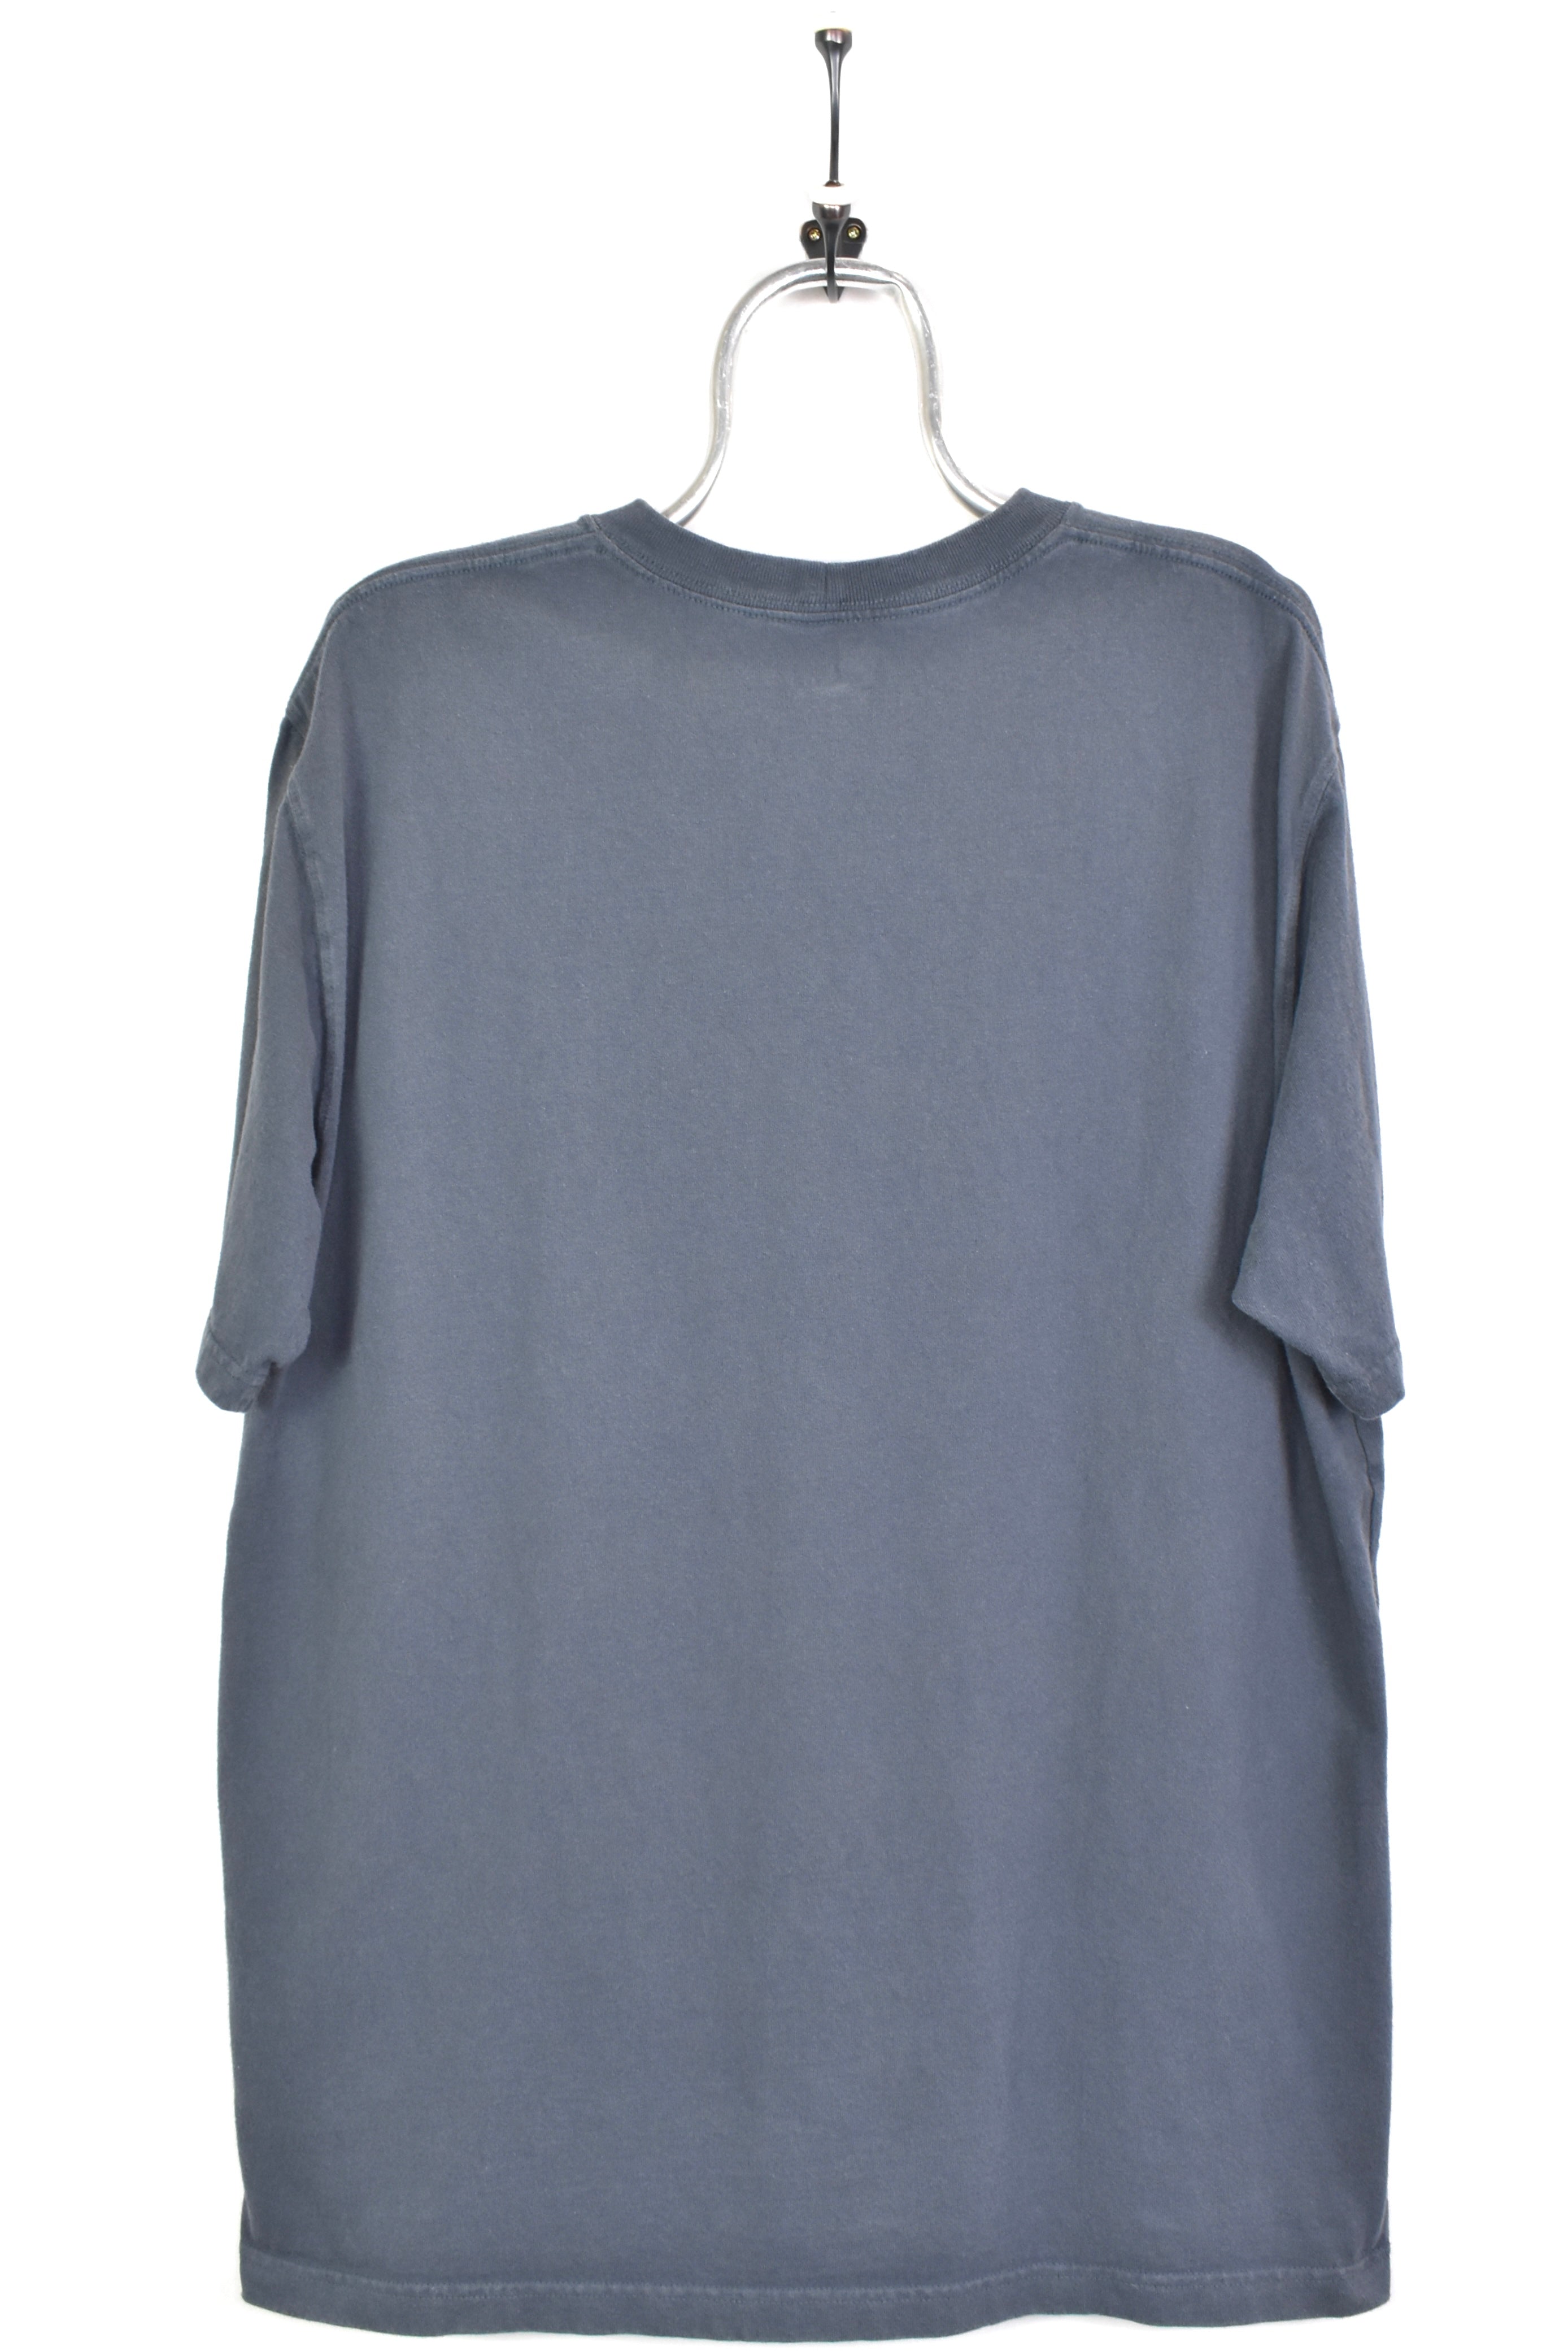 Vintage Carhartt grey t-shirt | XL CARHARTT